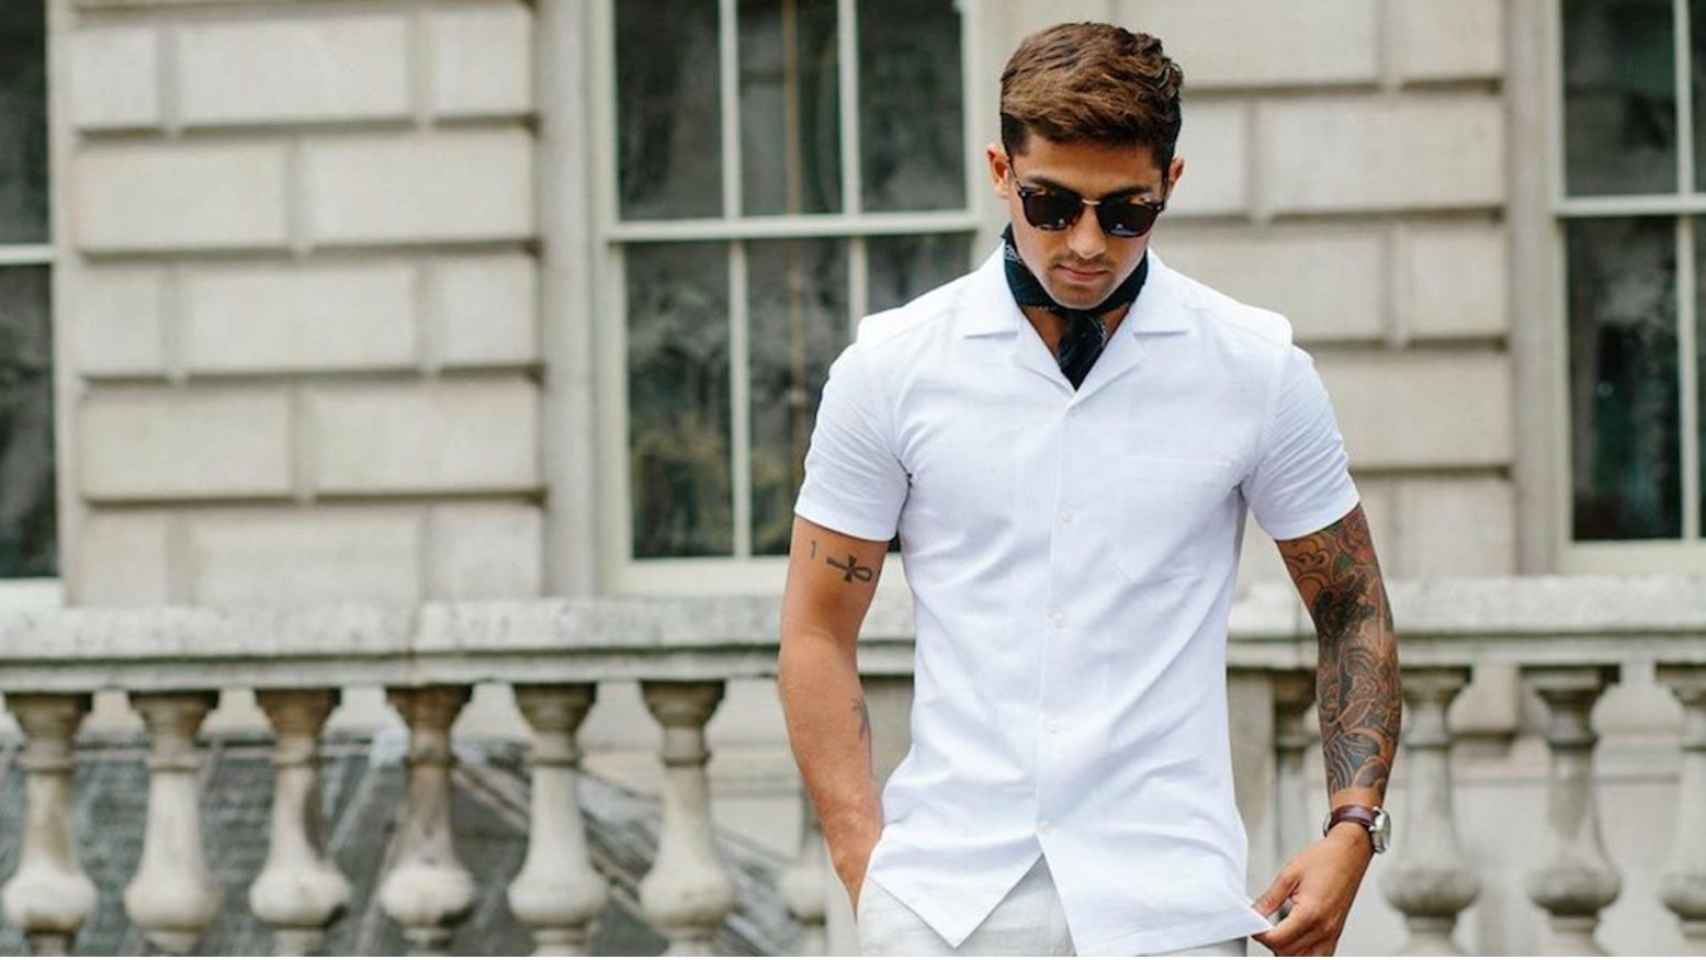 camisa de Polo de verano para hombre camisas de Polo cortas de algodón ajustada, estilo de moda 